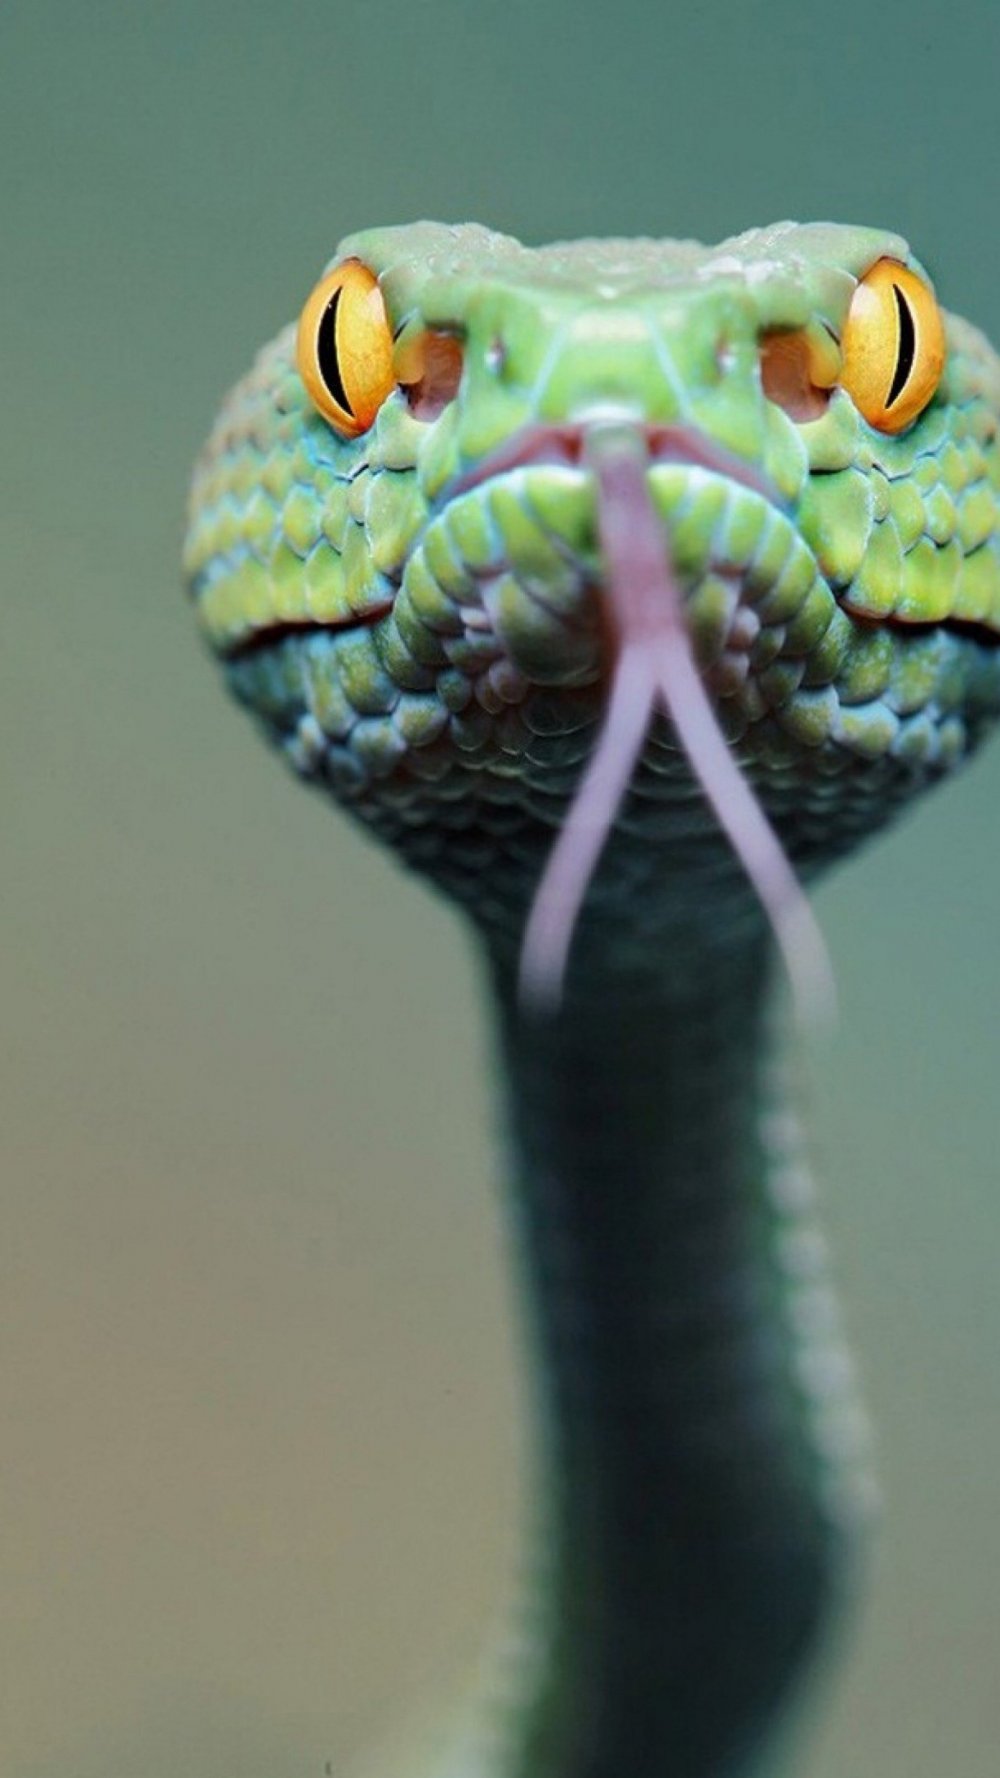 Язык змеи